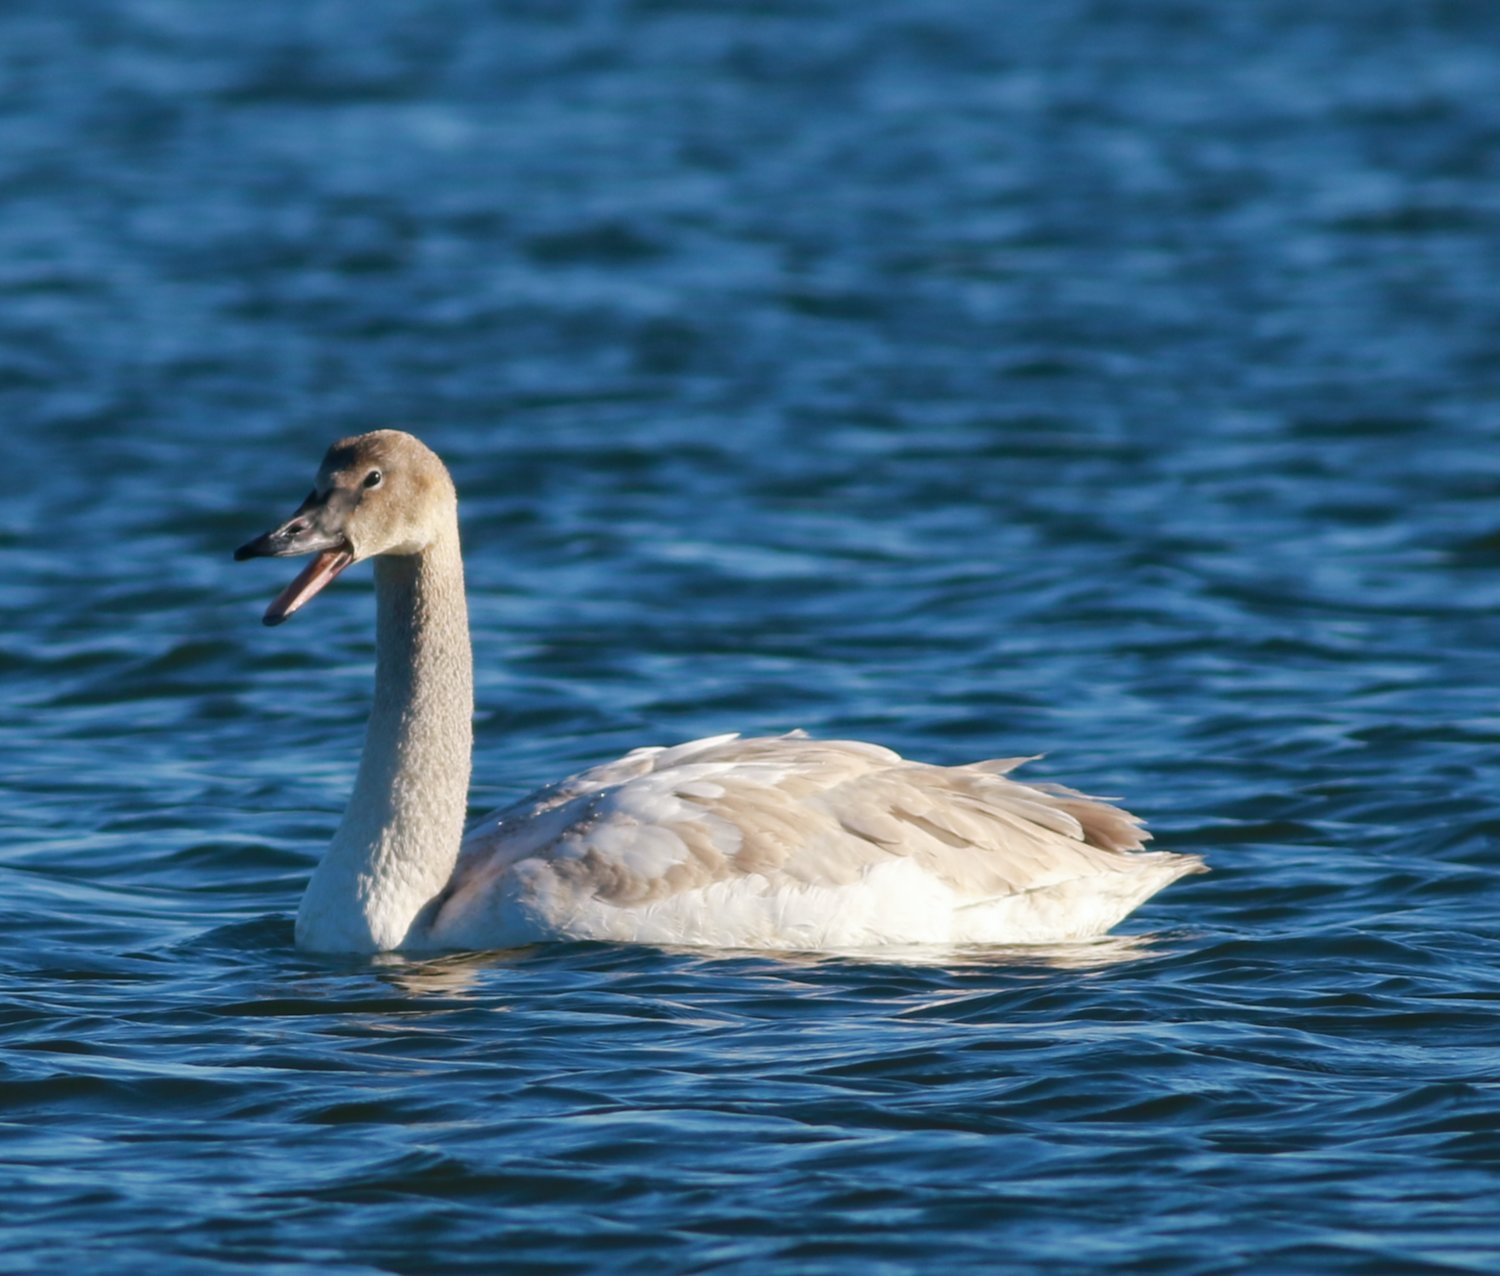 This rare Trumpeter Swan was seen in Sesachacha Pond last week.